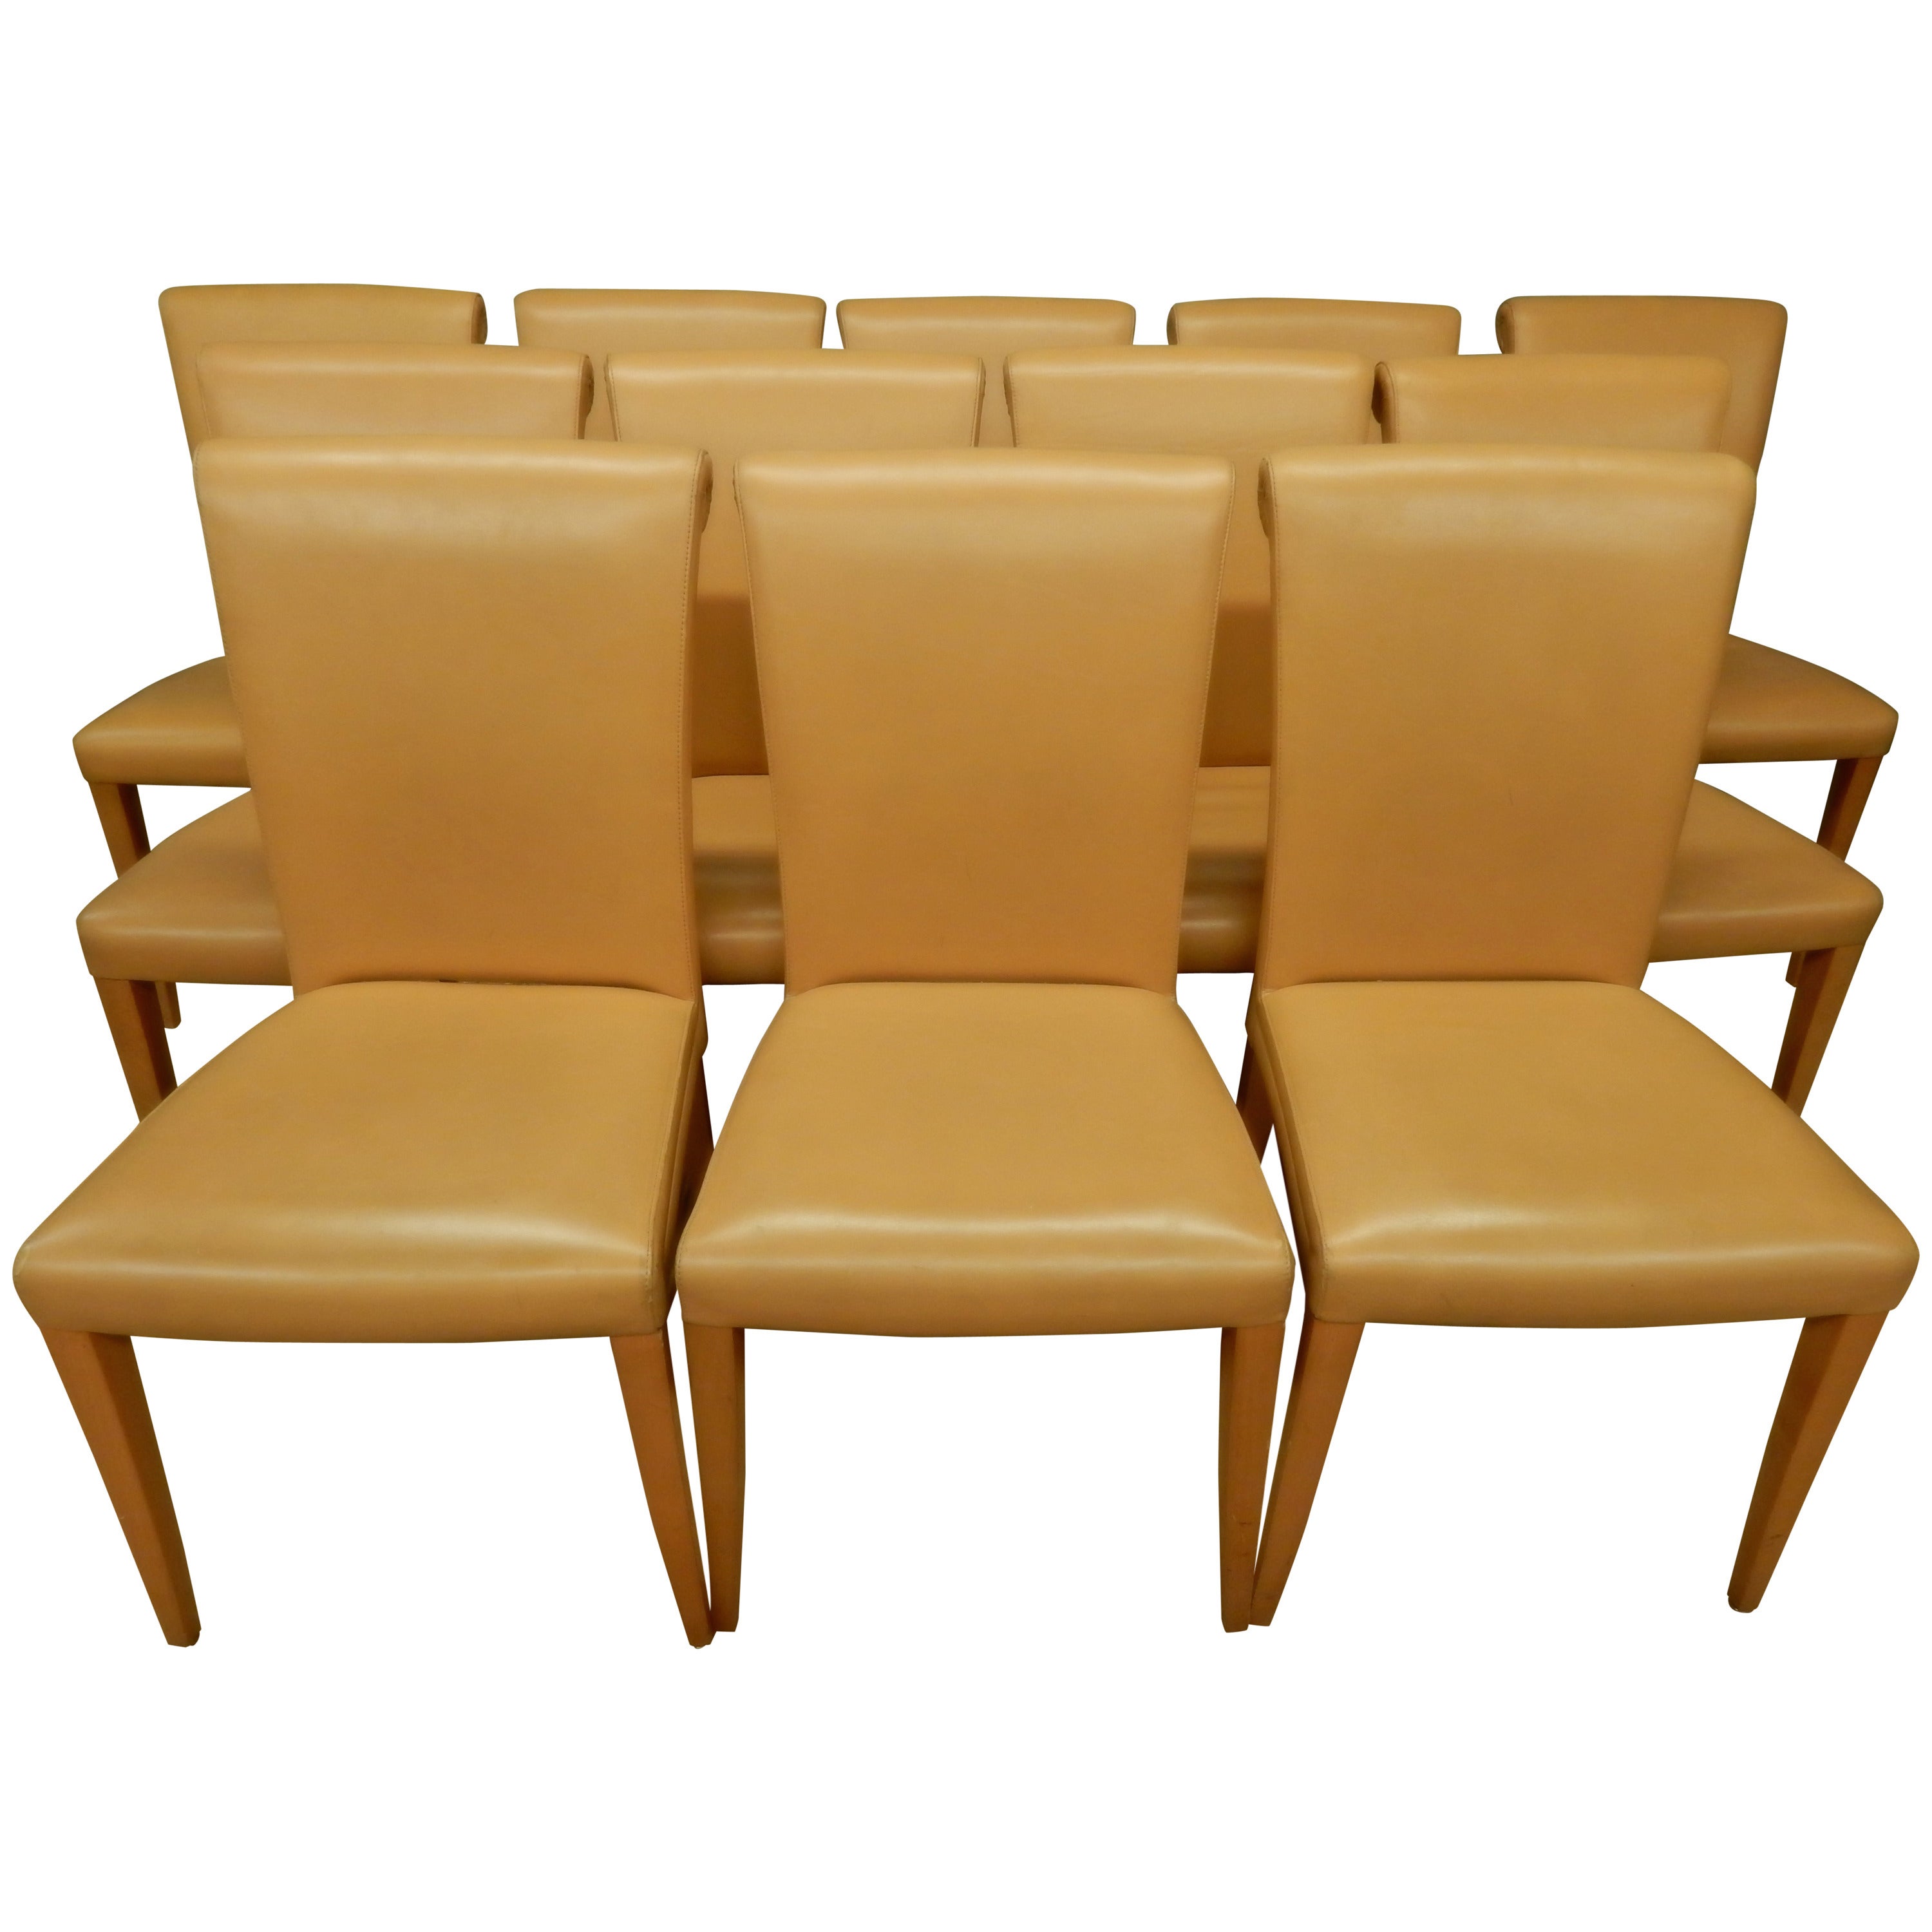 12 Italian Poltrona Frau Leather Dining Chairs For Sale